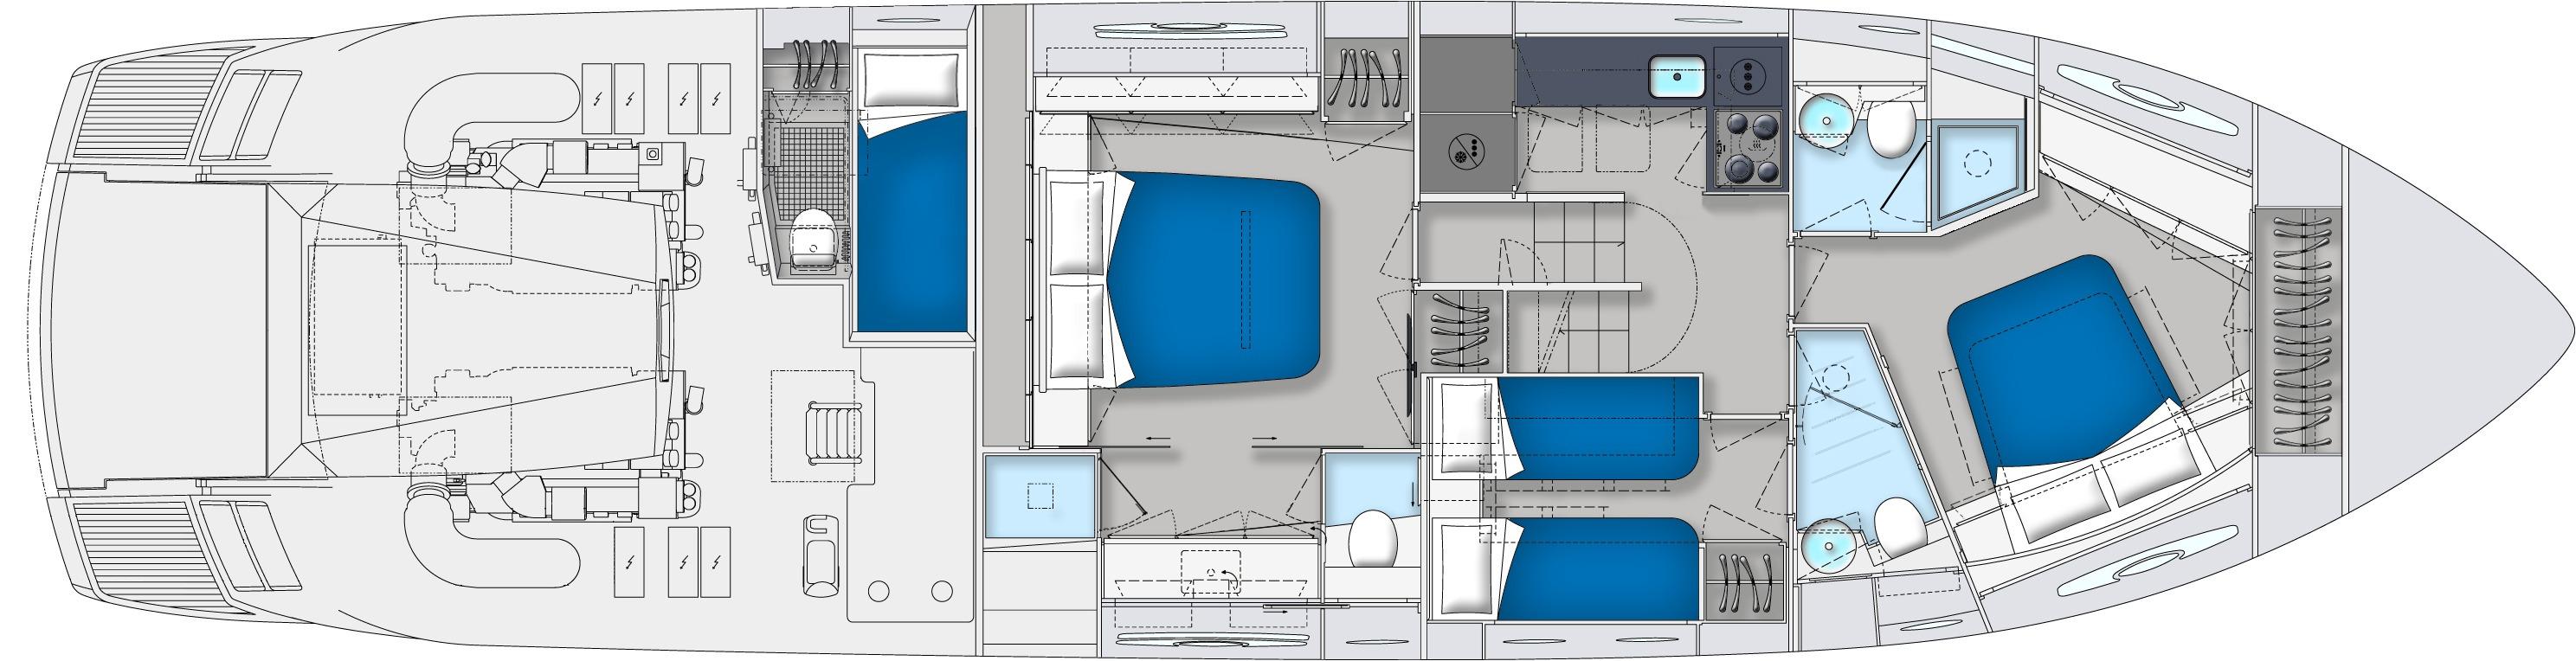 Manufacturer Provided Image: Pershing 62 4 Cabin Layout Plan